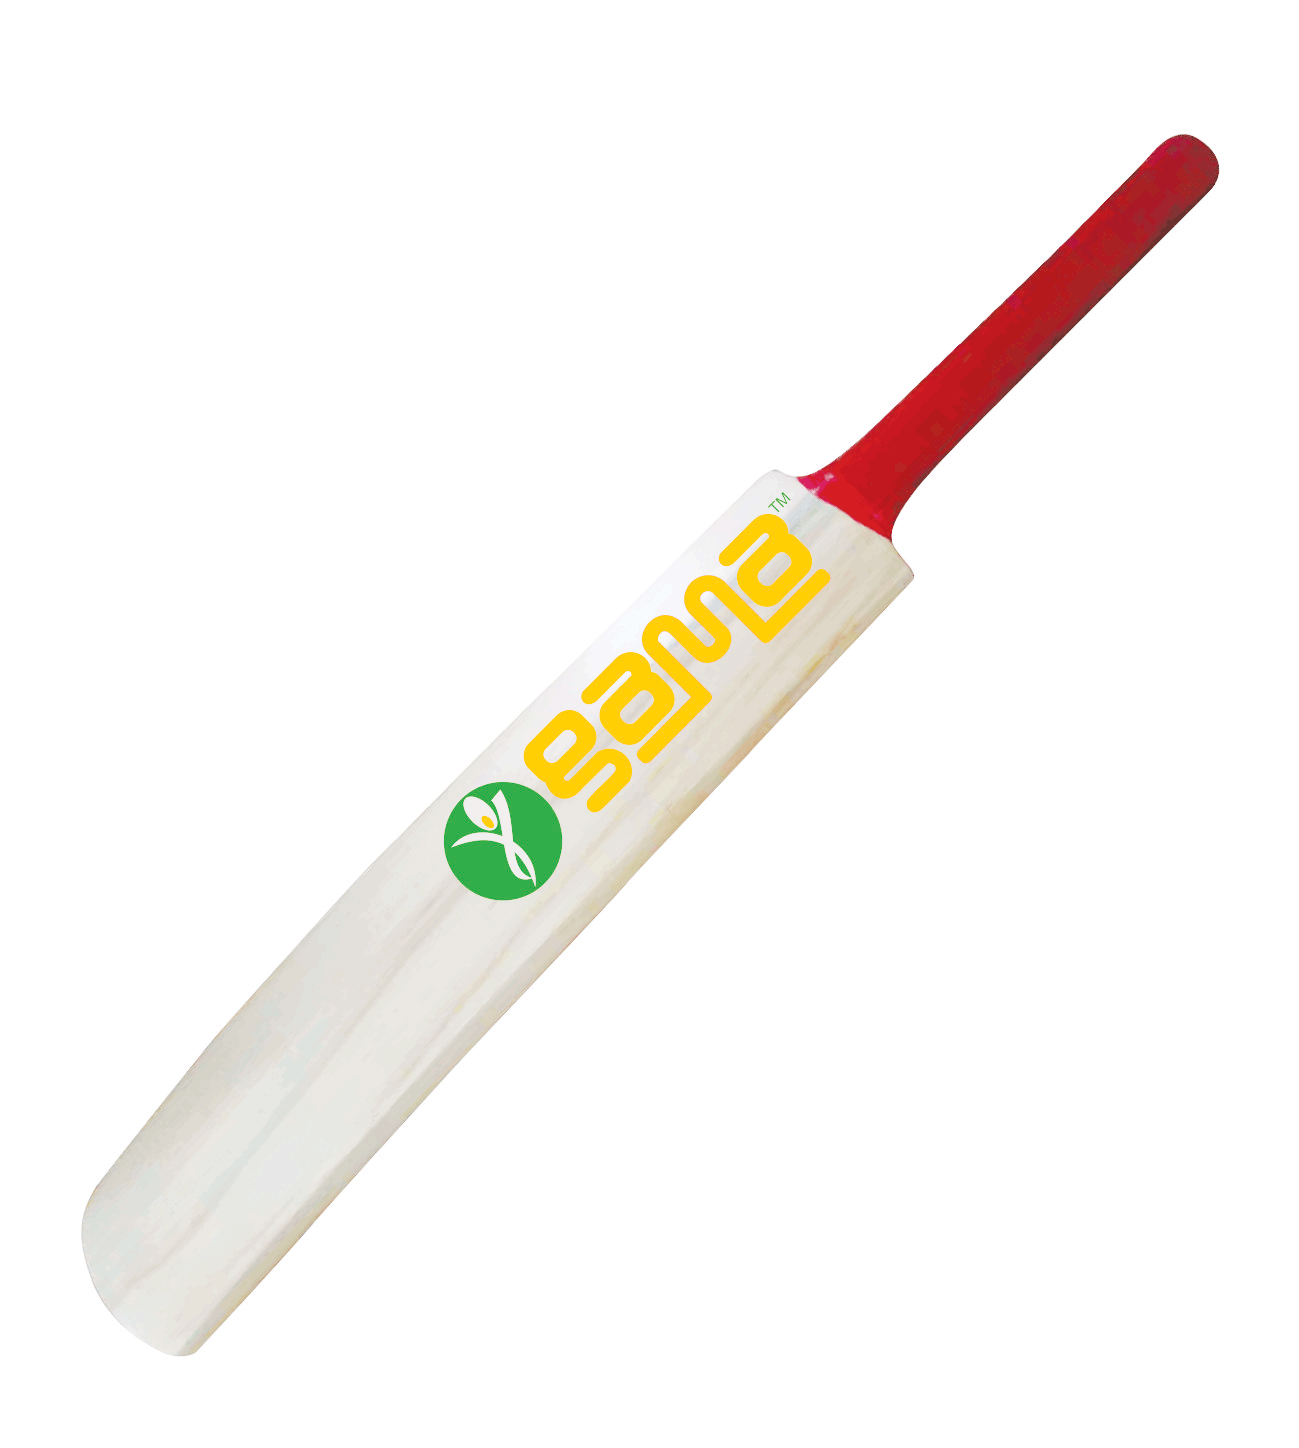 Star Jr. Thick Blade Cricket Bat